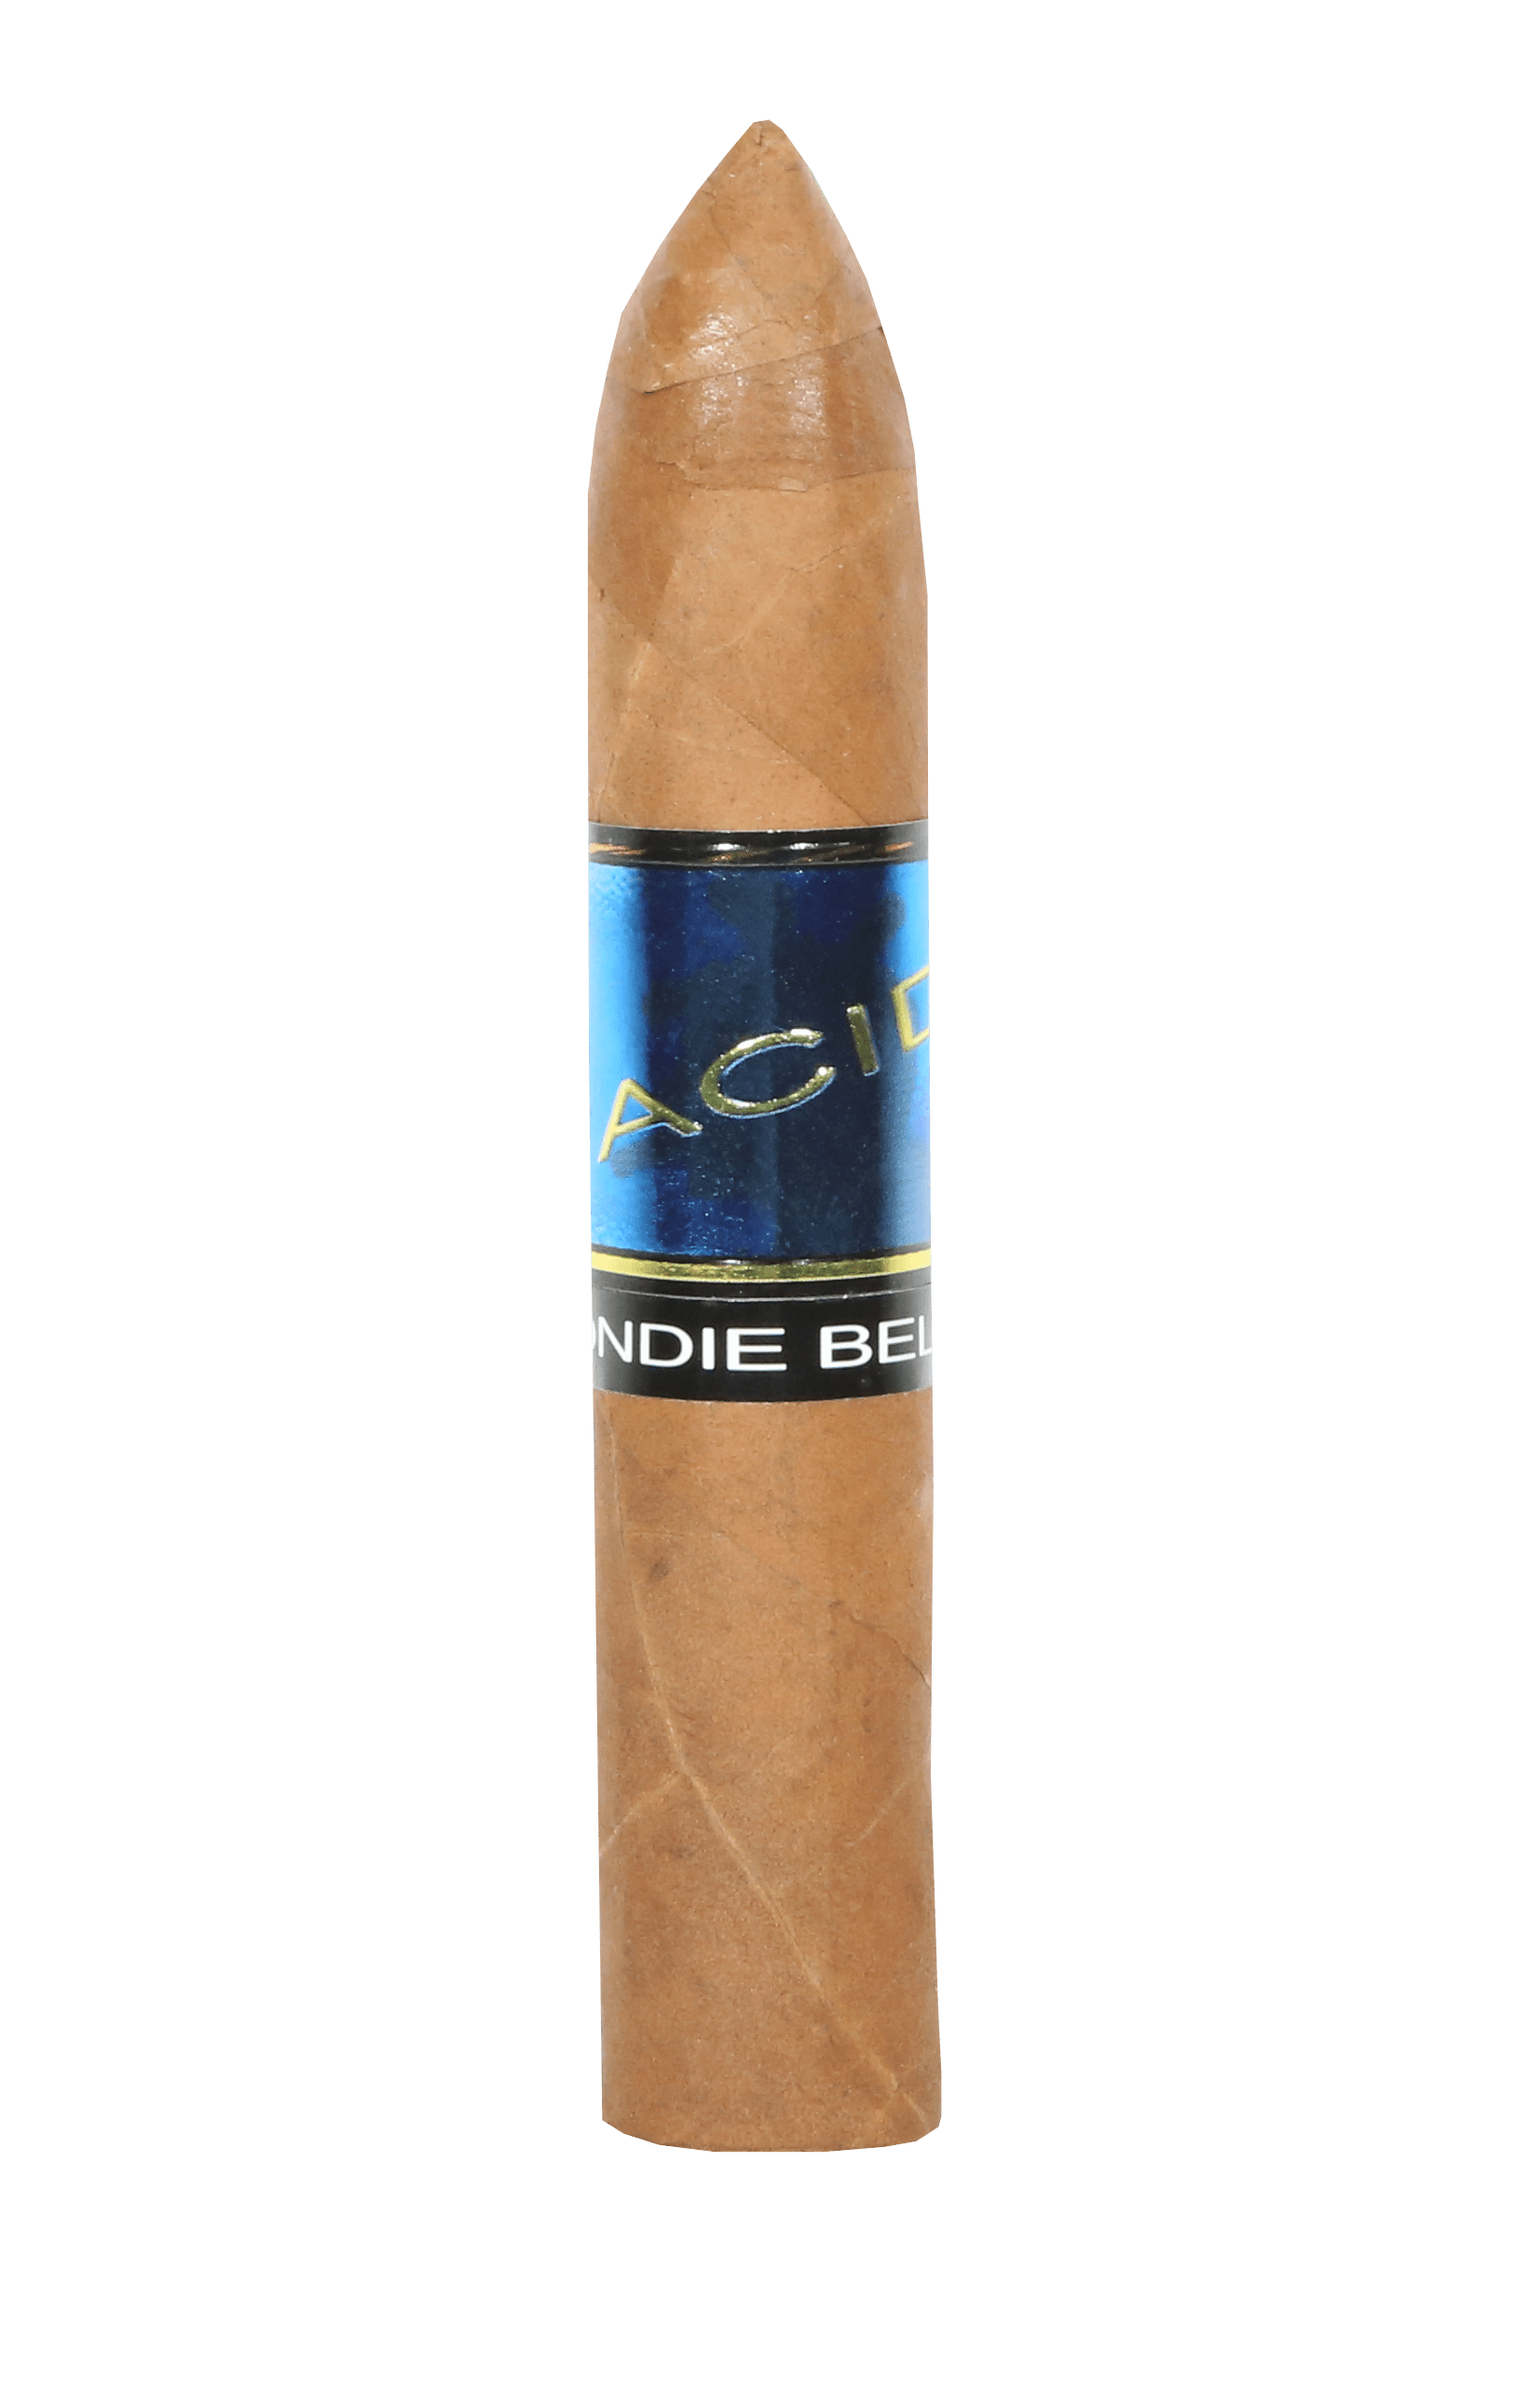 Single Acid Blondie Belicoso cigar